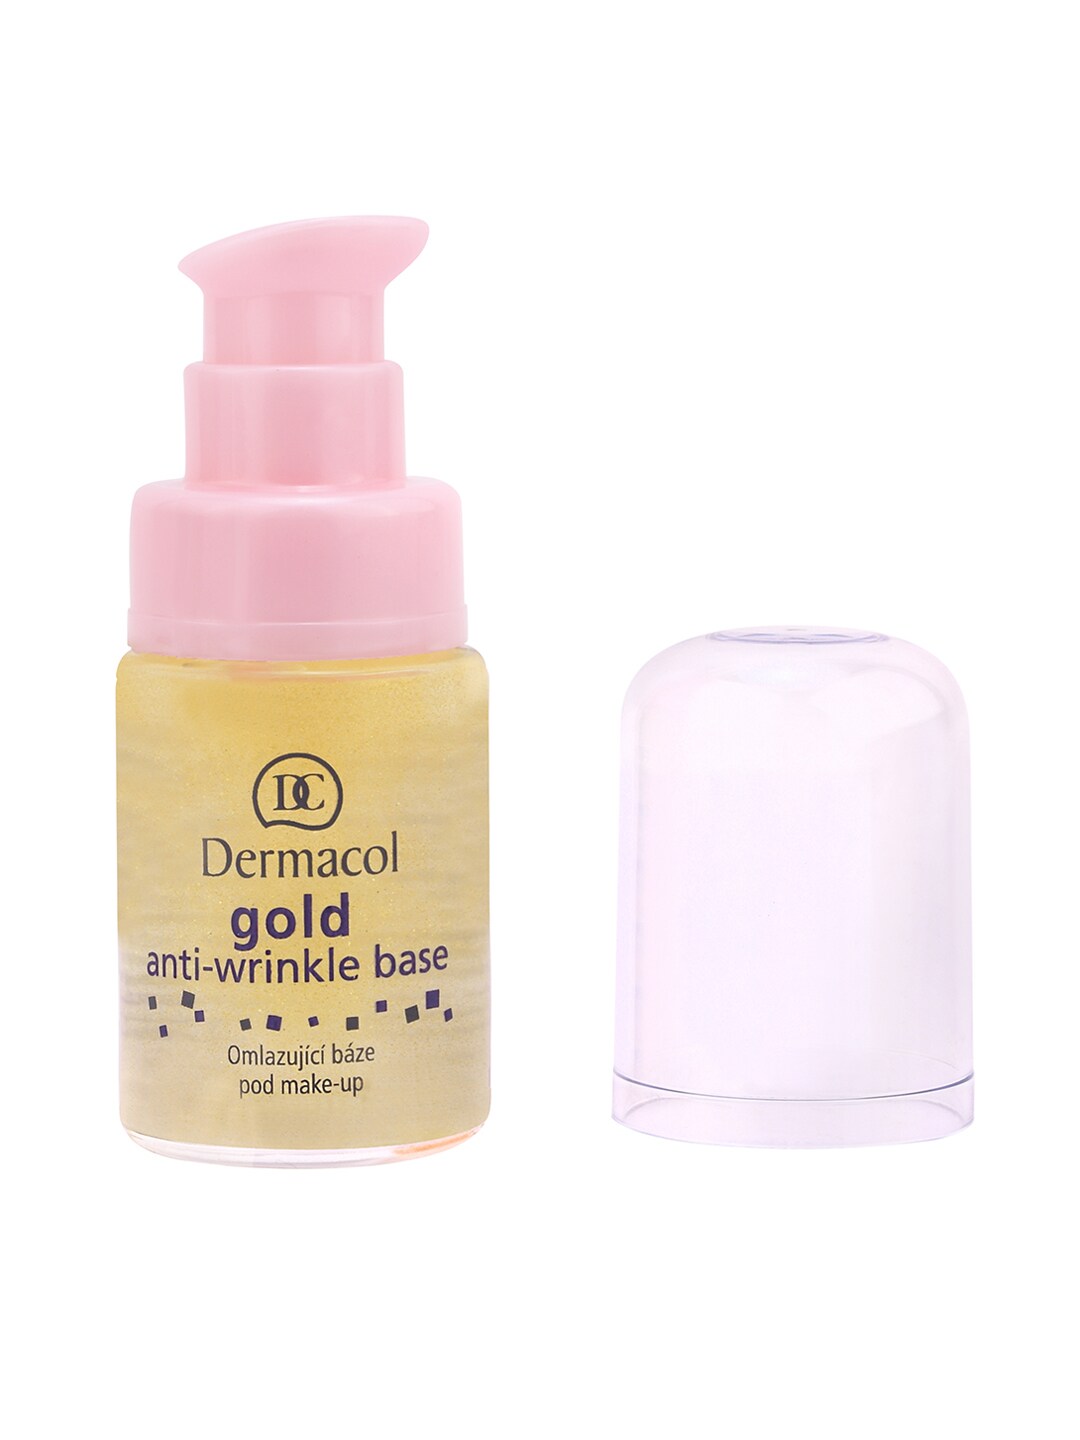 Dermacol Gold Anti-Wrinkle Make-up Base Primer 1409A 15 ml Price in India